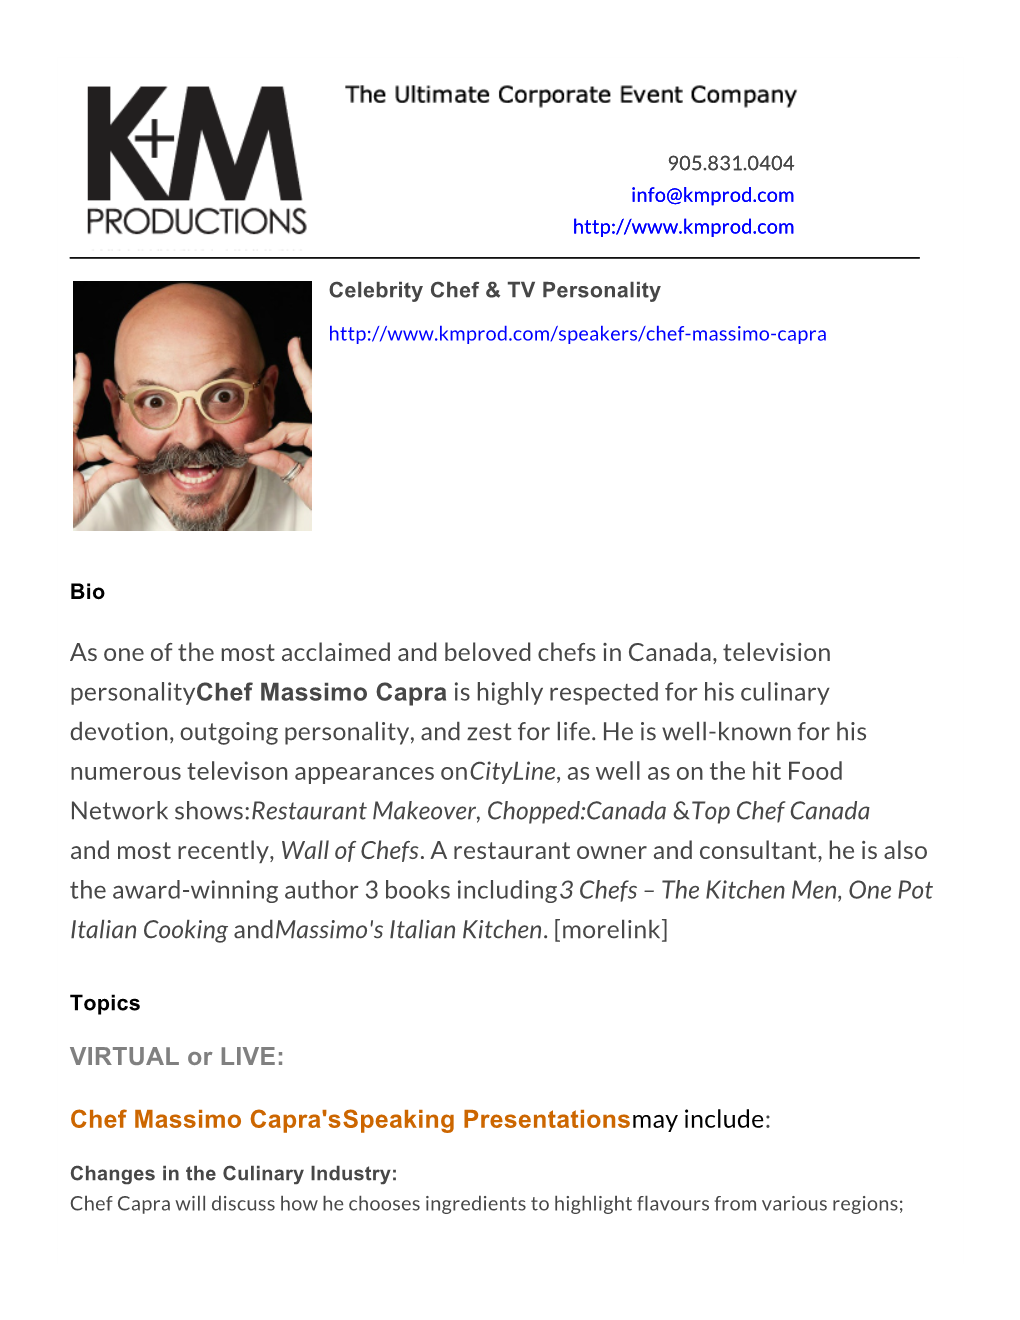 Chef Massimo Capra | Celebrity Chef | Speaking